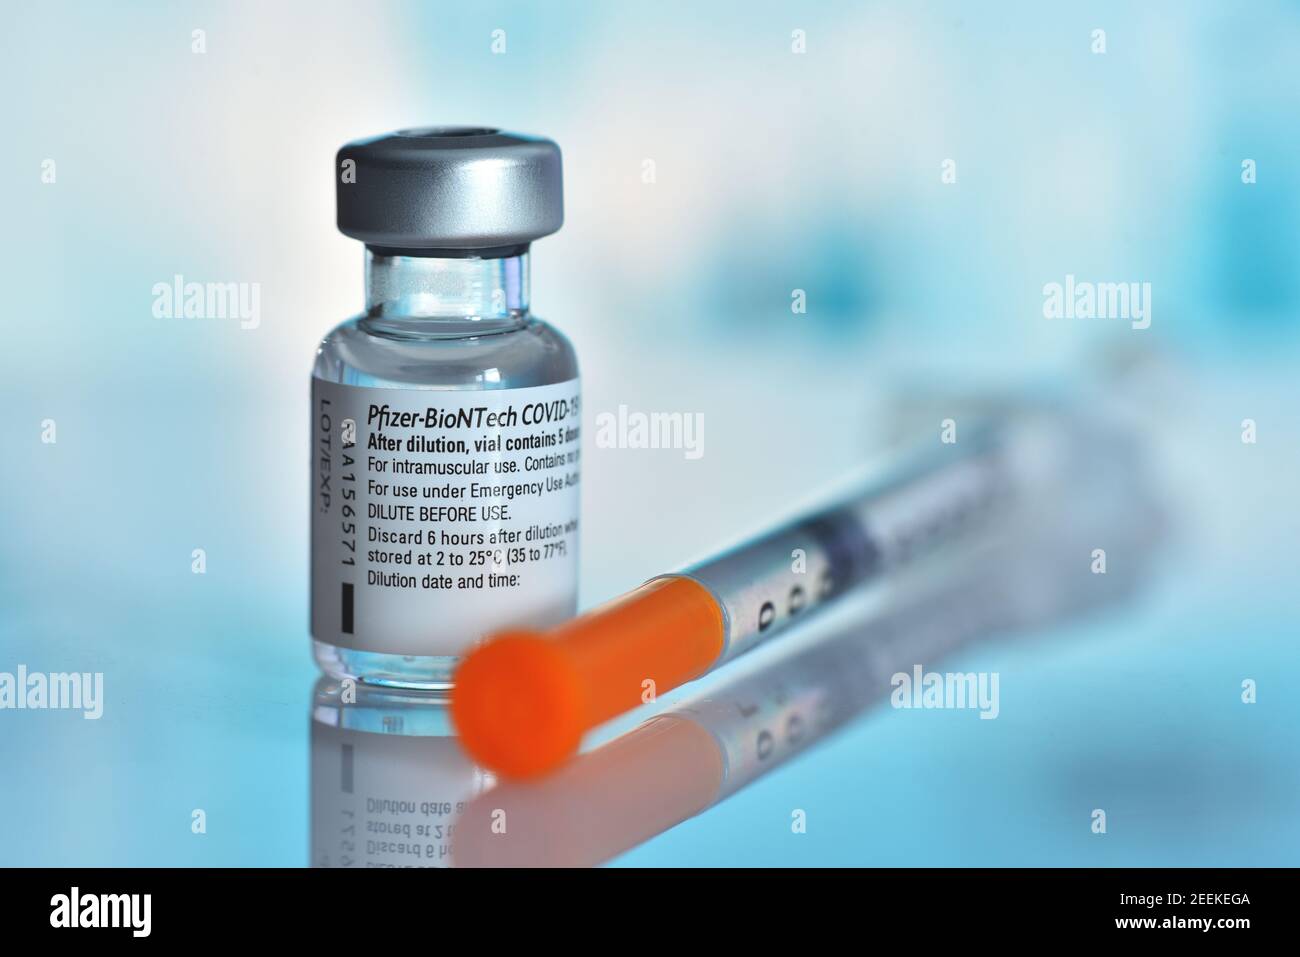 Galati, Romania - February 16, 2021: Pfizer-BioNTech COVID-19 Vaccine 'comirnaty' ampoule Stock Photo